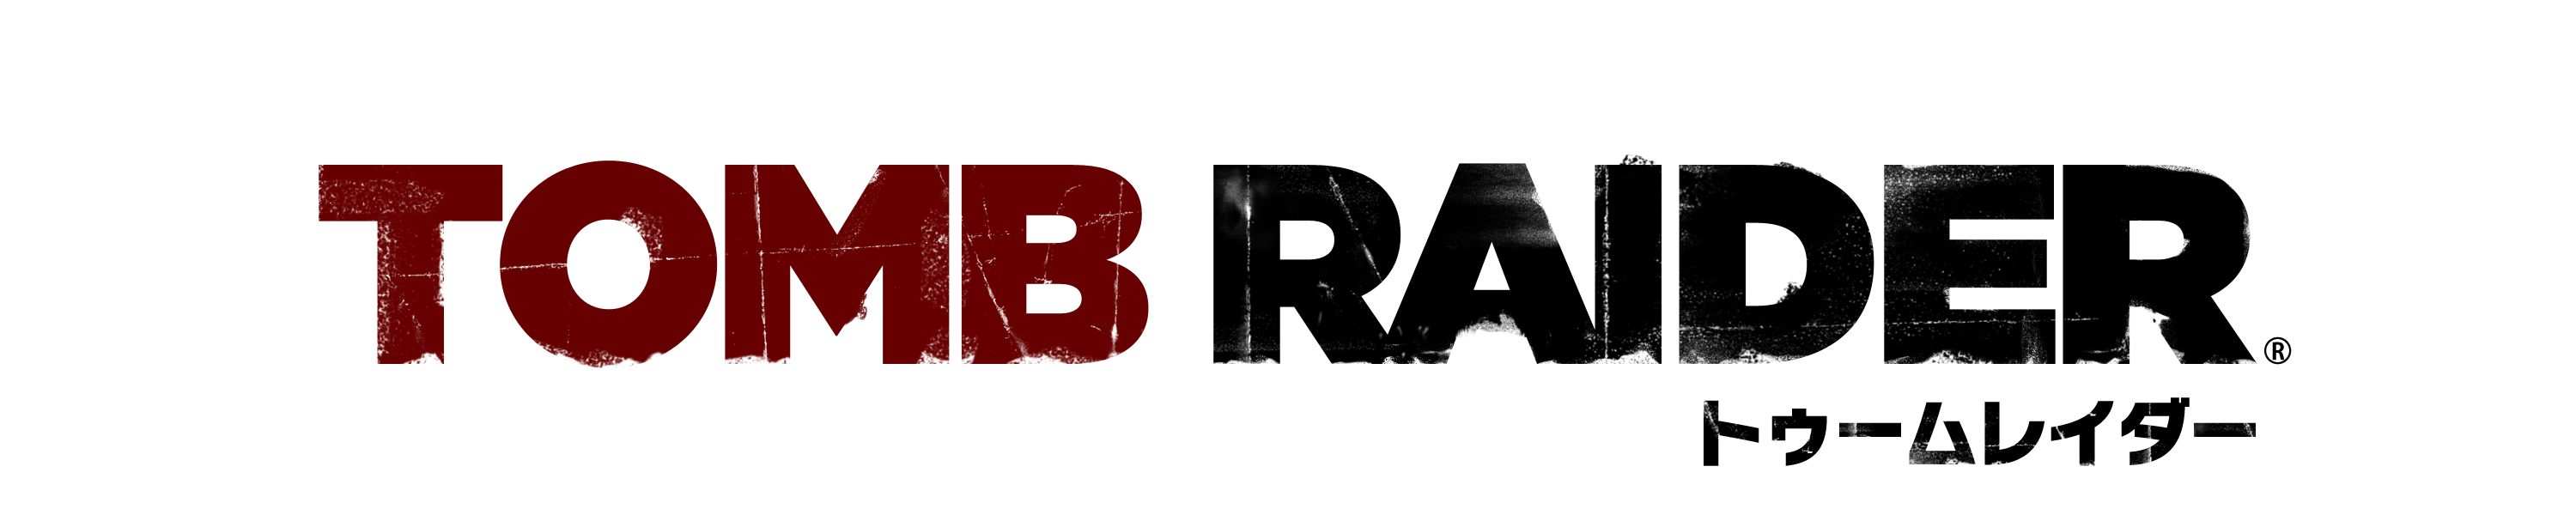 Final Tomb Raider logos_J_RGB.jpg